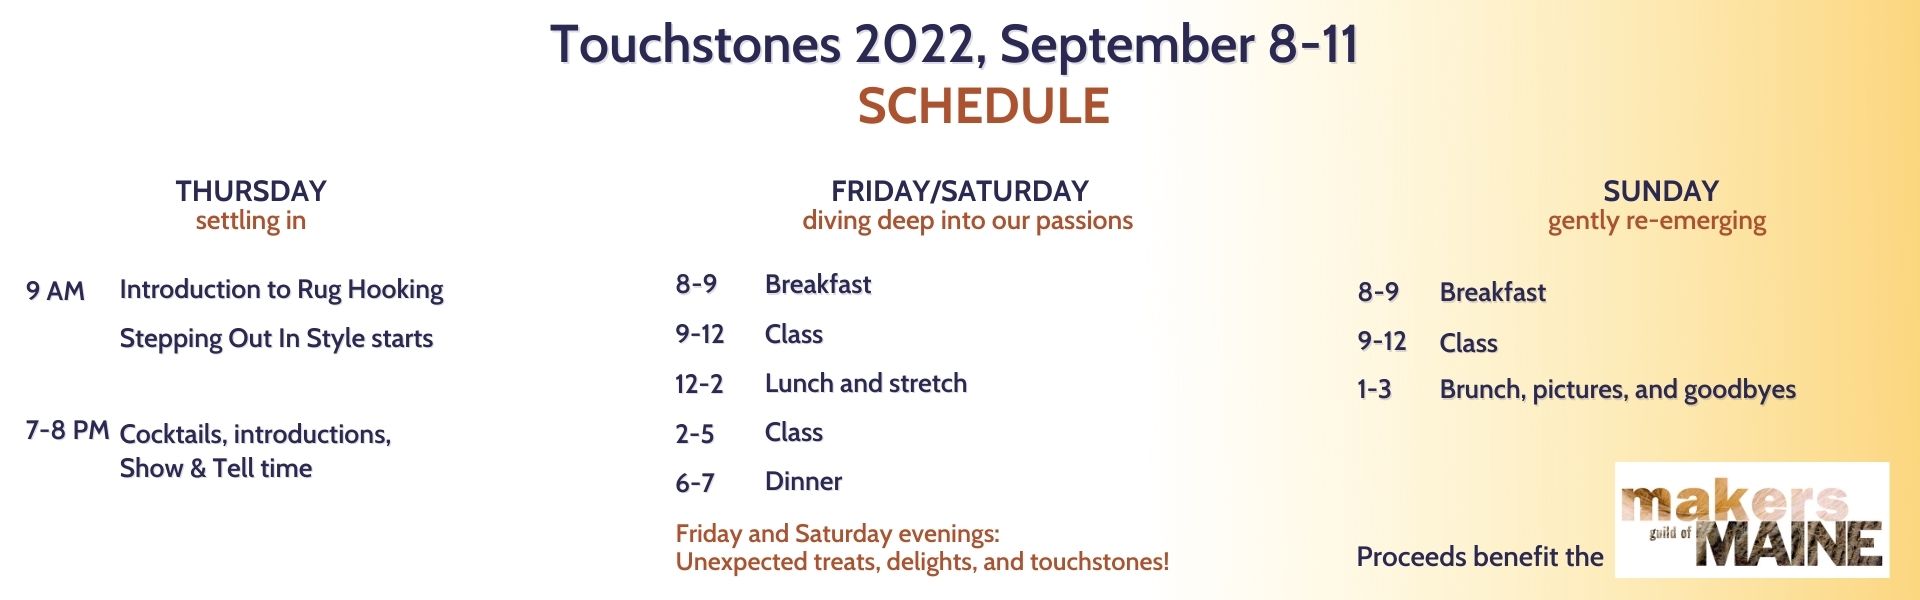 Touchstones schedule